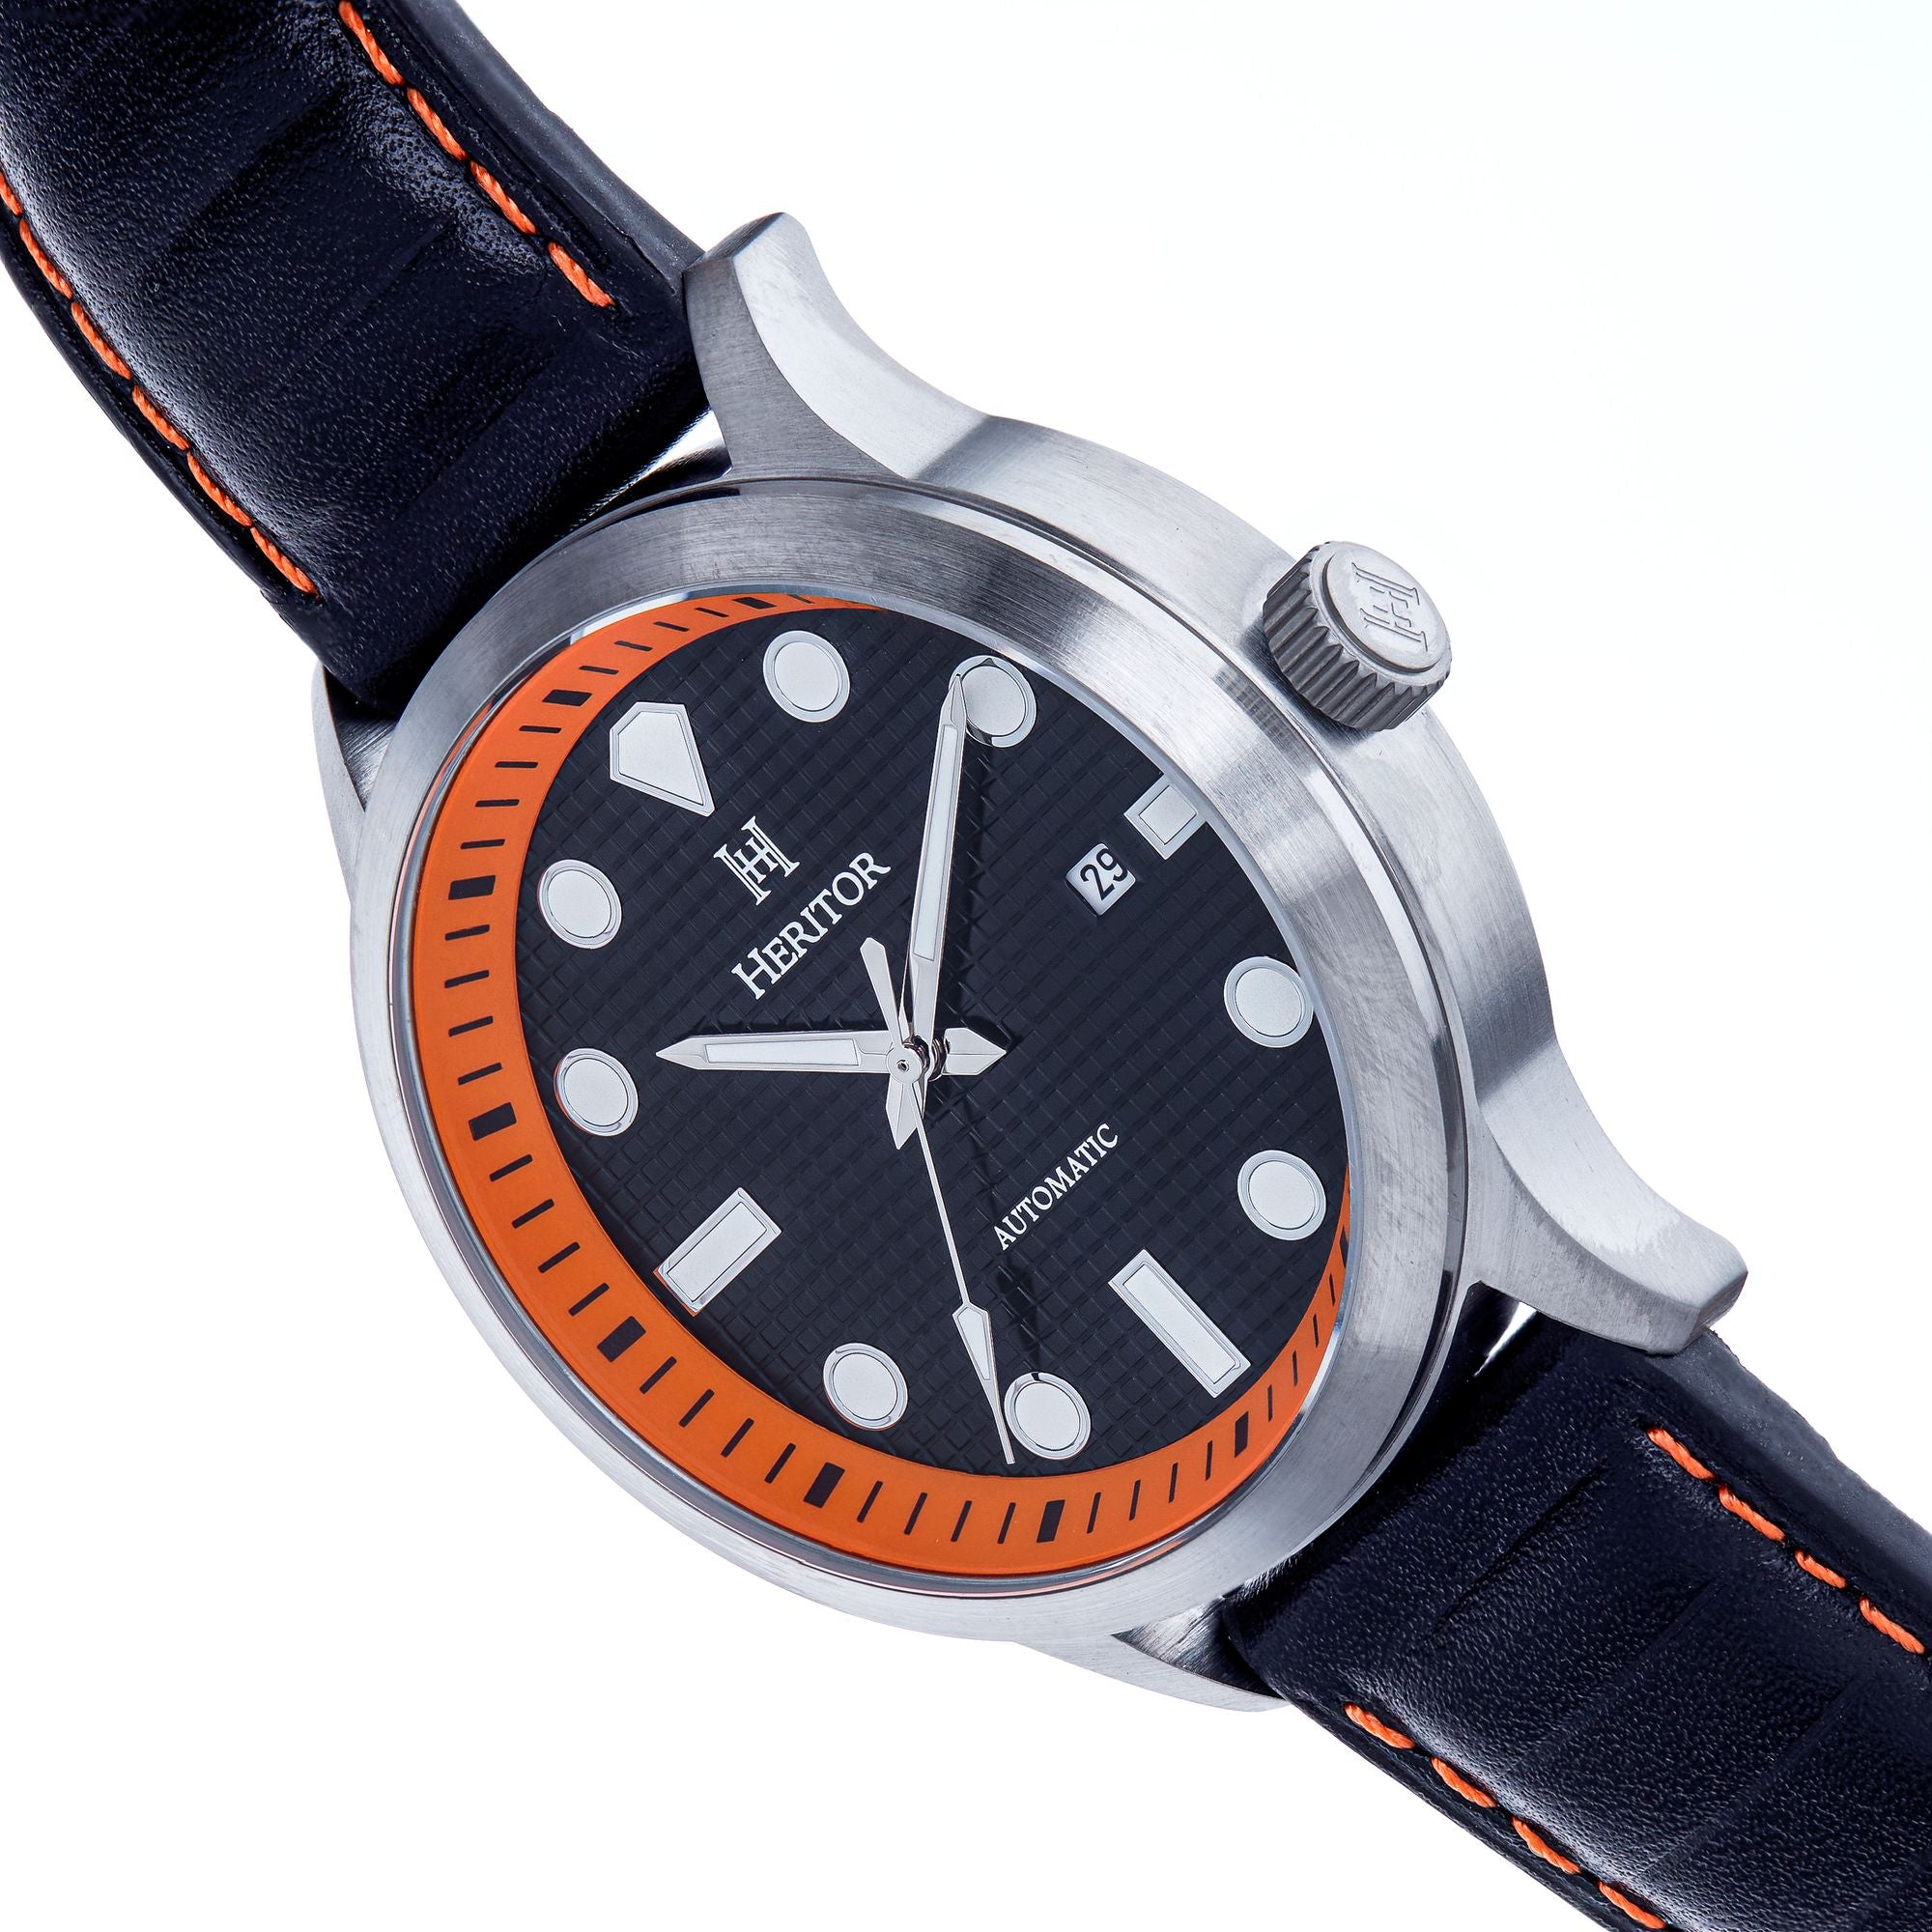 Heritor Automatic Bradford Leather-Band Watch w/Date - Black & Orange - HERHS1110